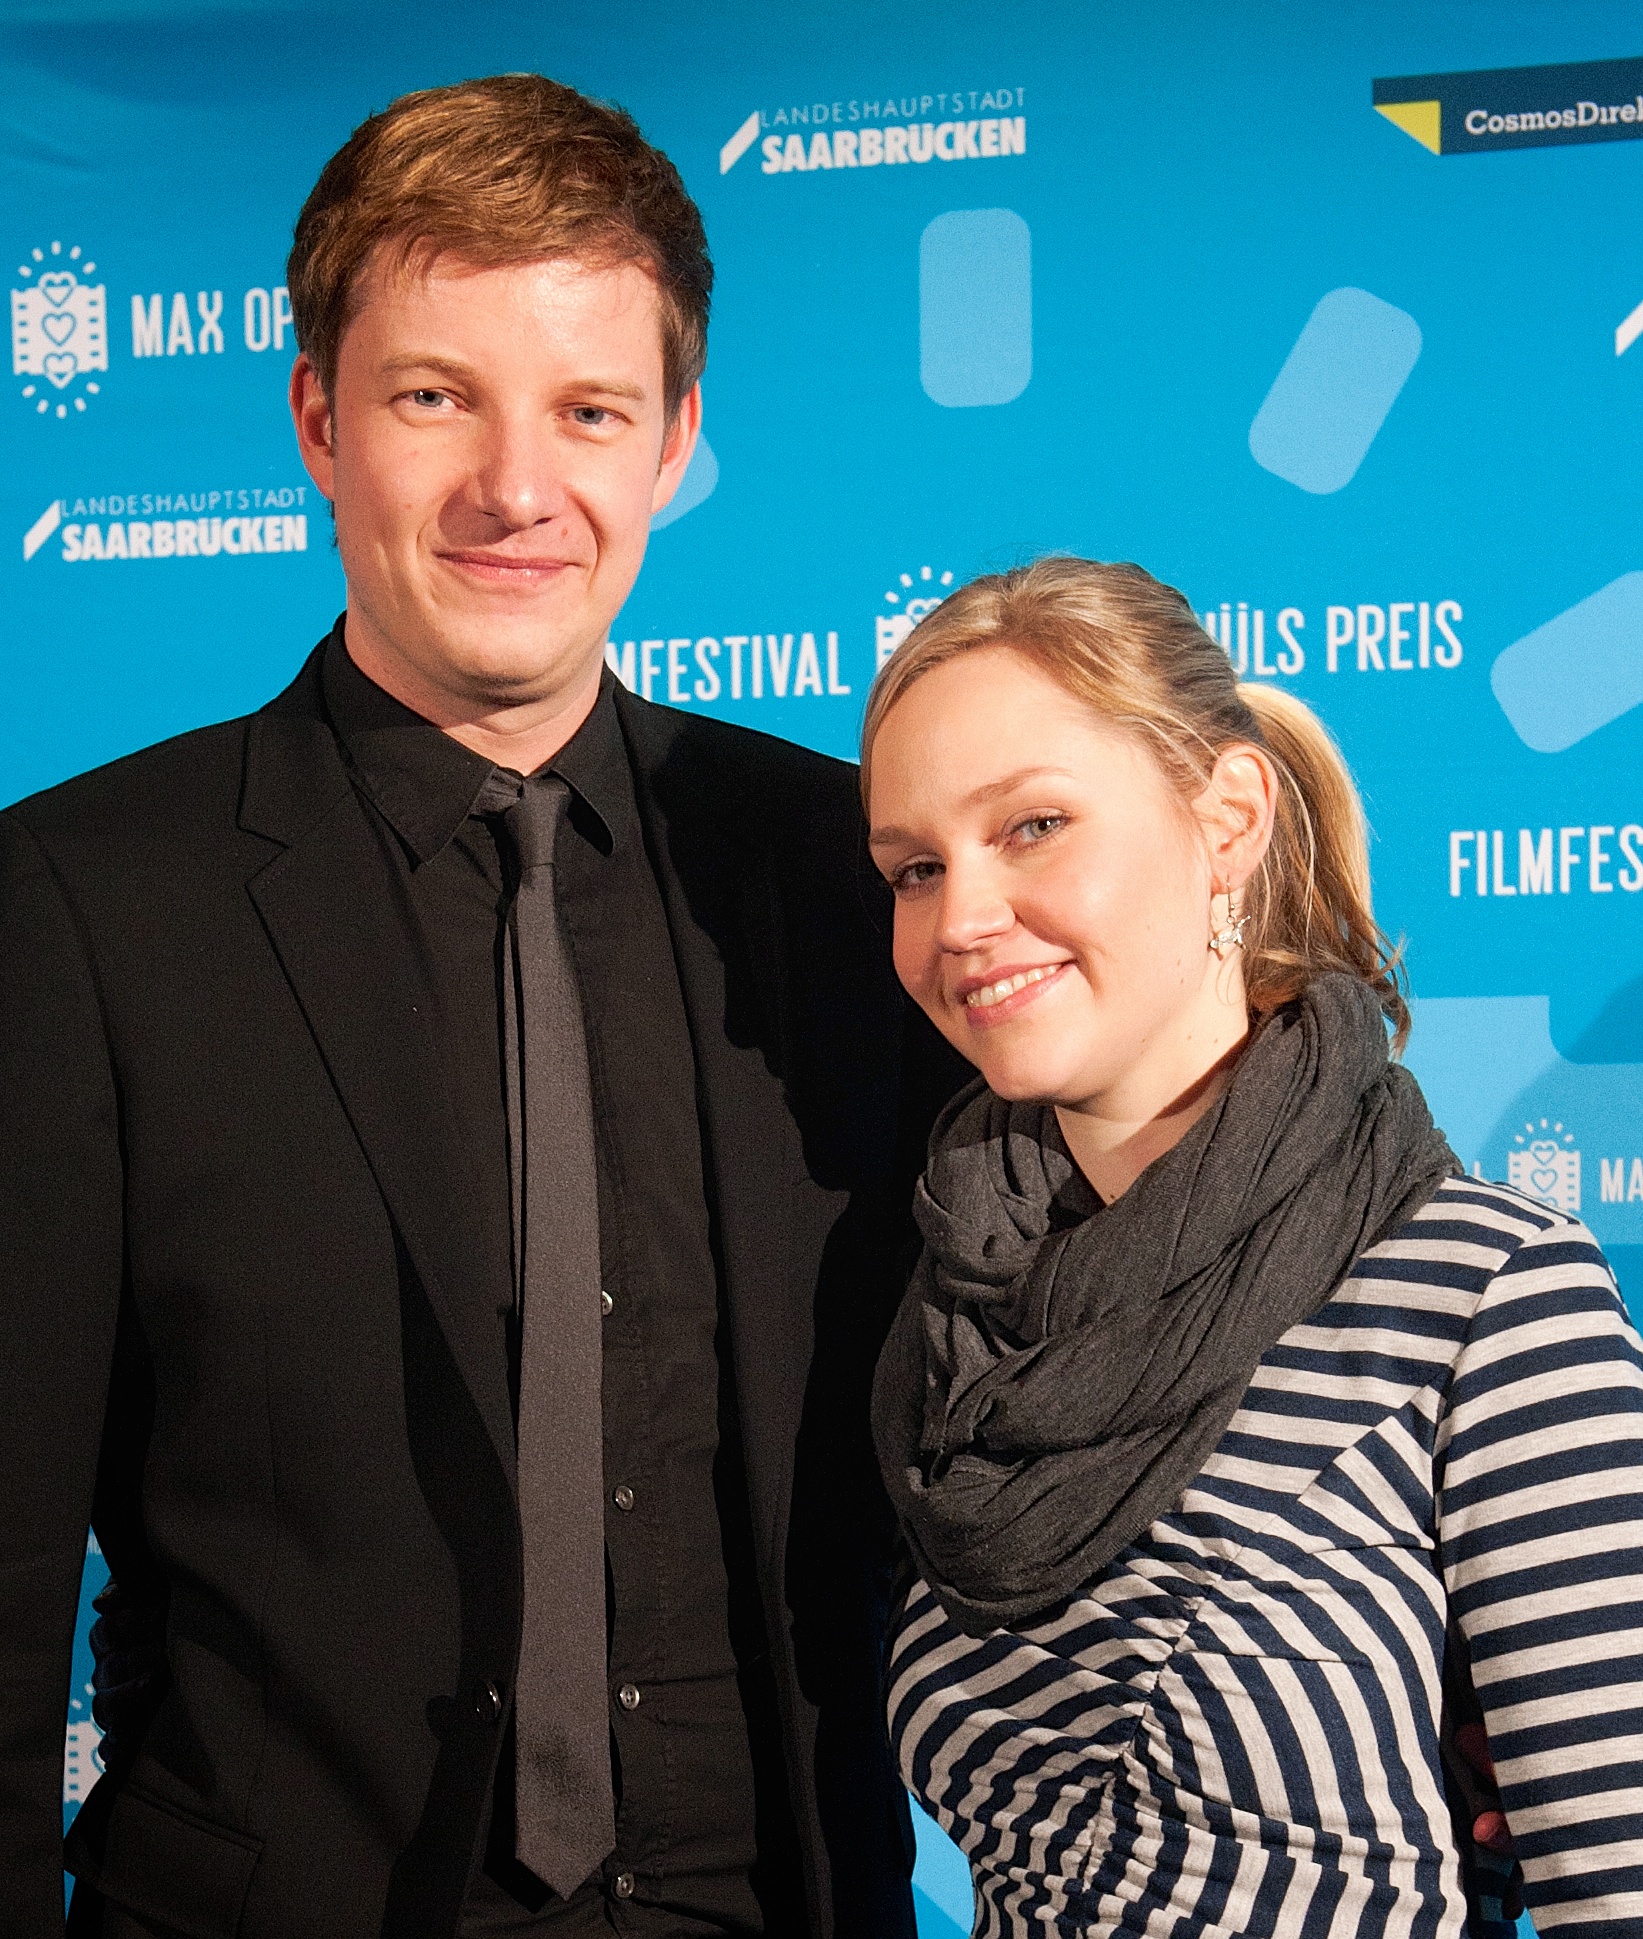 Martin Busker and producer Kathrin Tabler at film award Max-Ophüls-Preis.